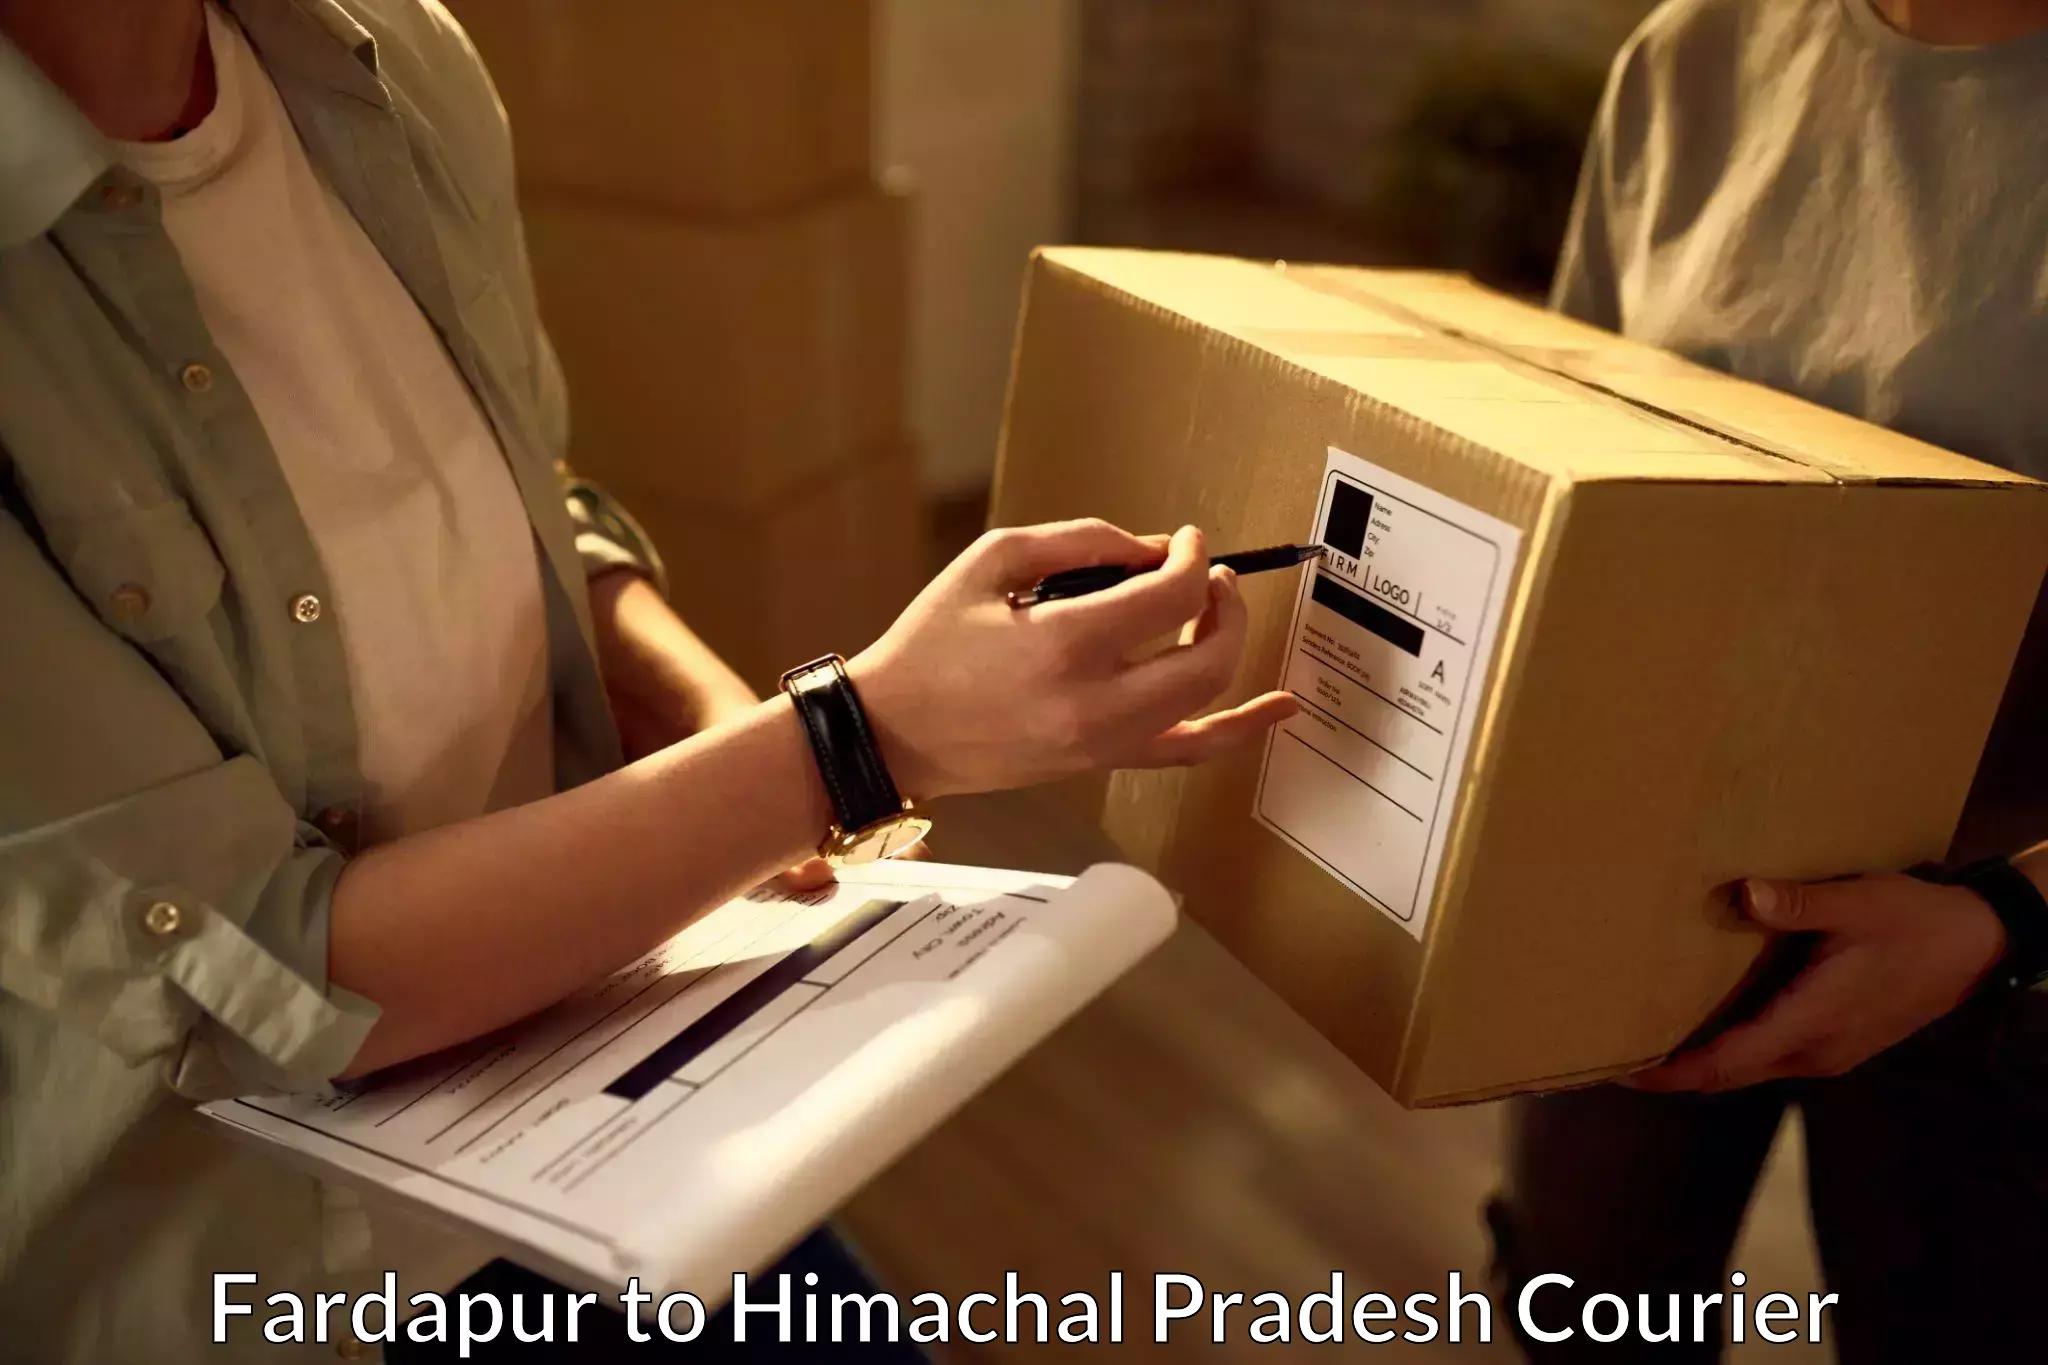 Courier service innovation Fardapur to Una Himachal Pradesh